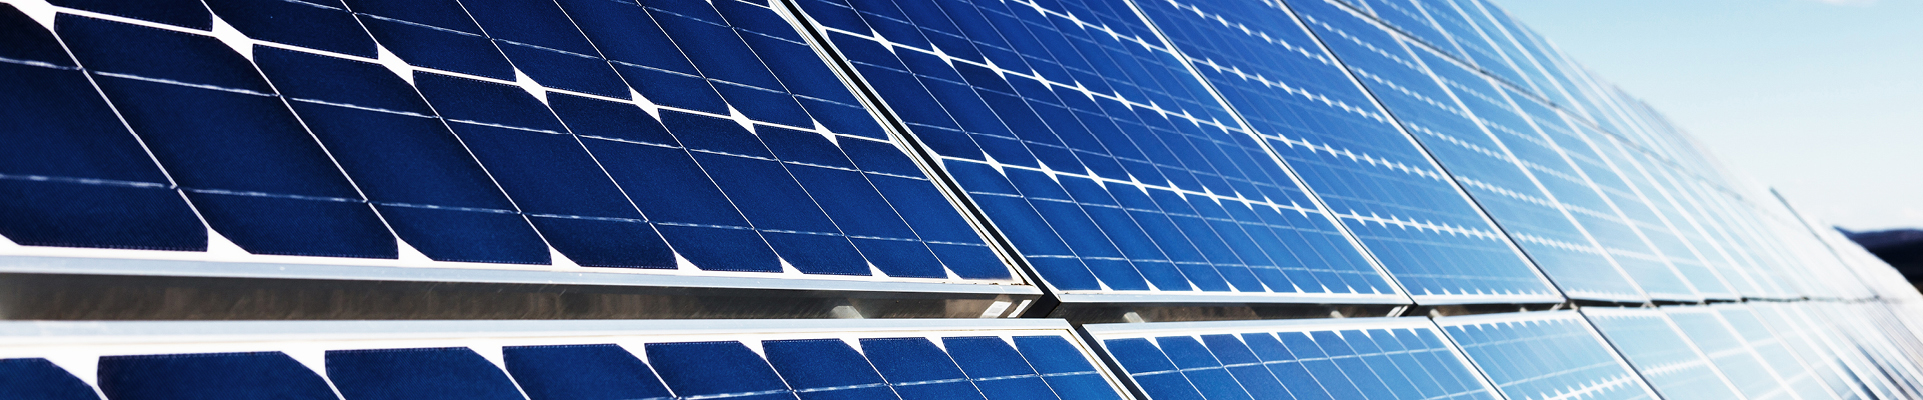 Fachfirma Photovoltaik Anlagen / Solar installieren mit Stromspeicher - Lippe, Blomberg, Rinteln, Schaumburg, Dörentrup, Barntrup, Extertal, Kalletal, Hameln, Lemgo, OWL